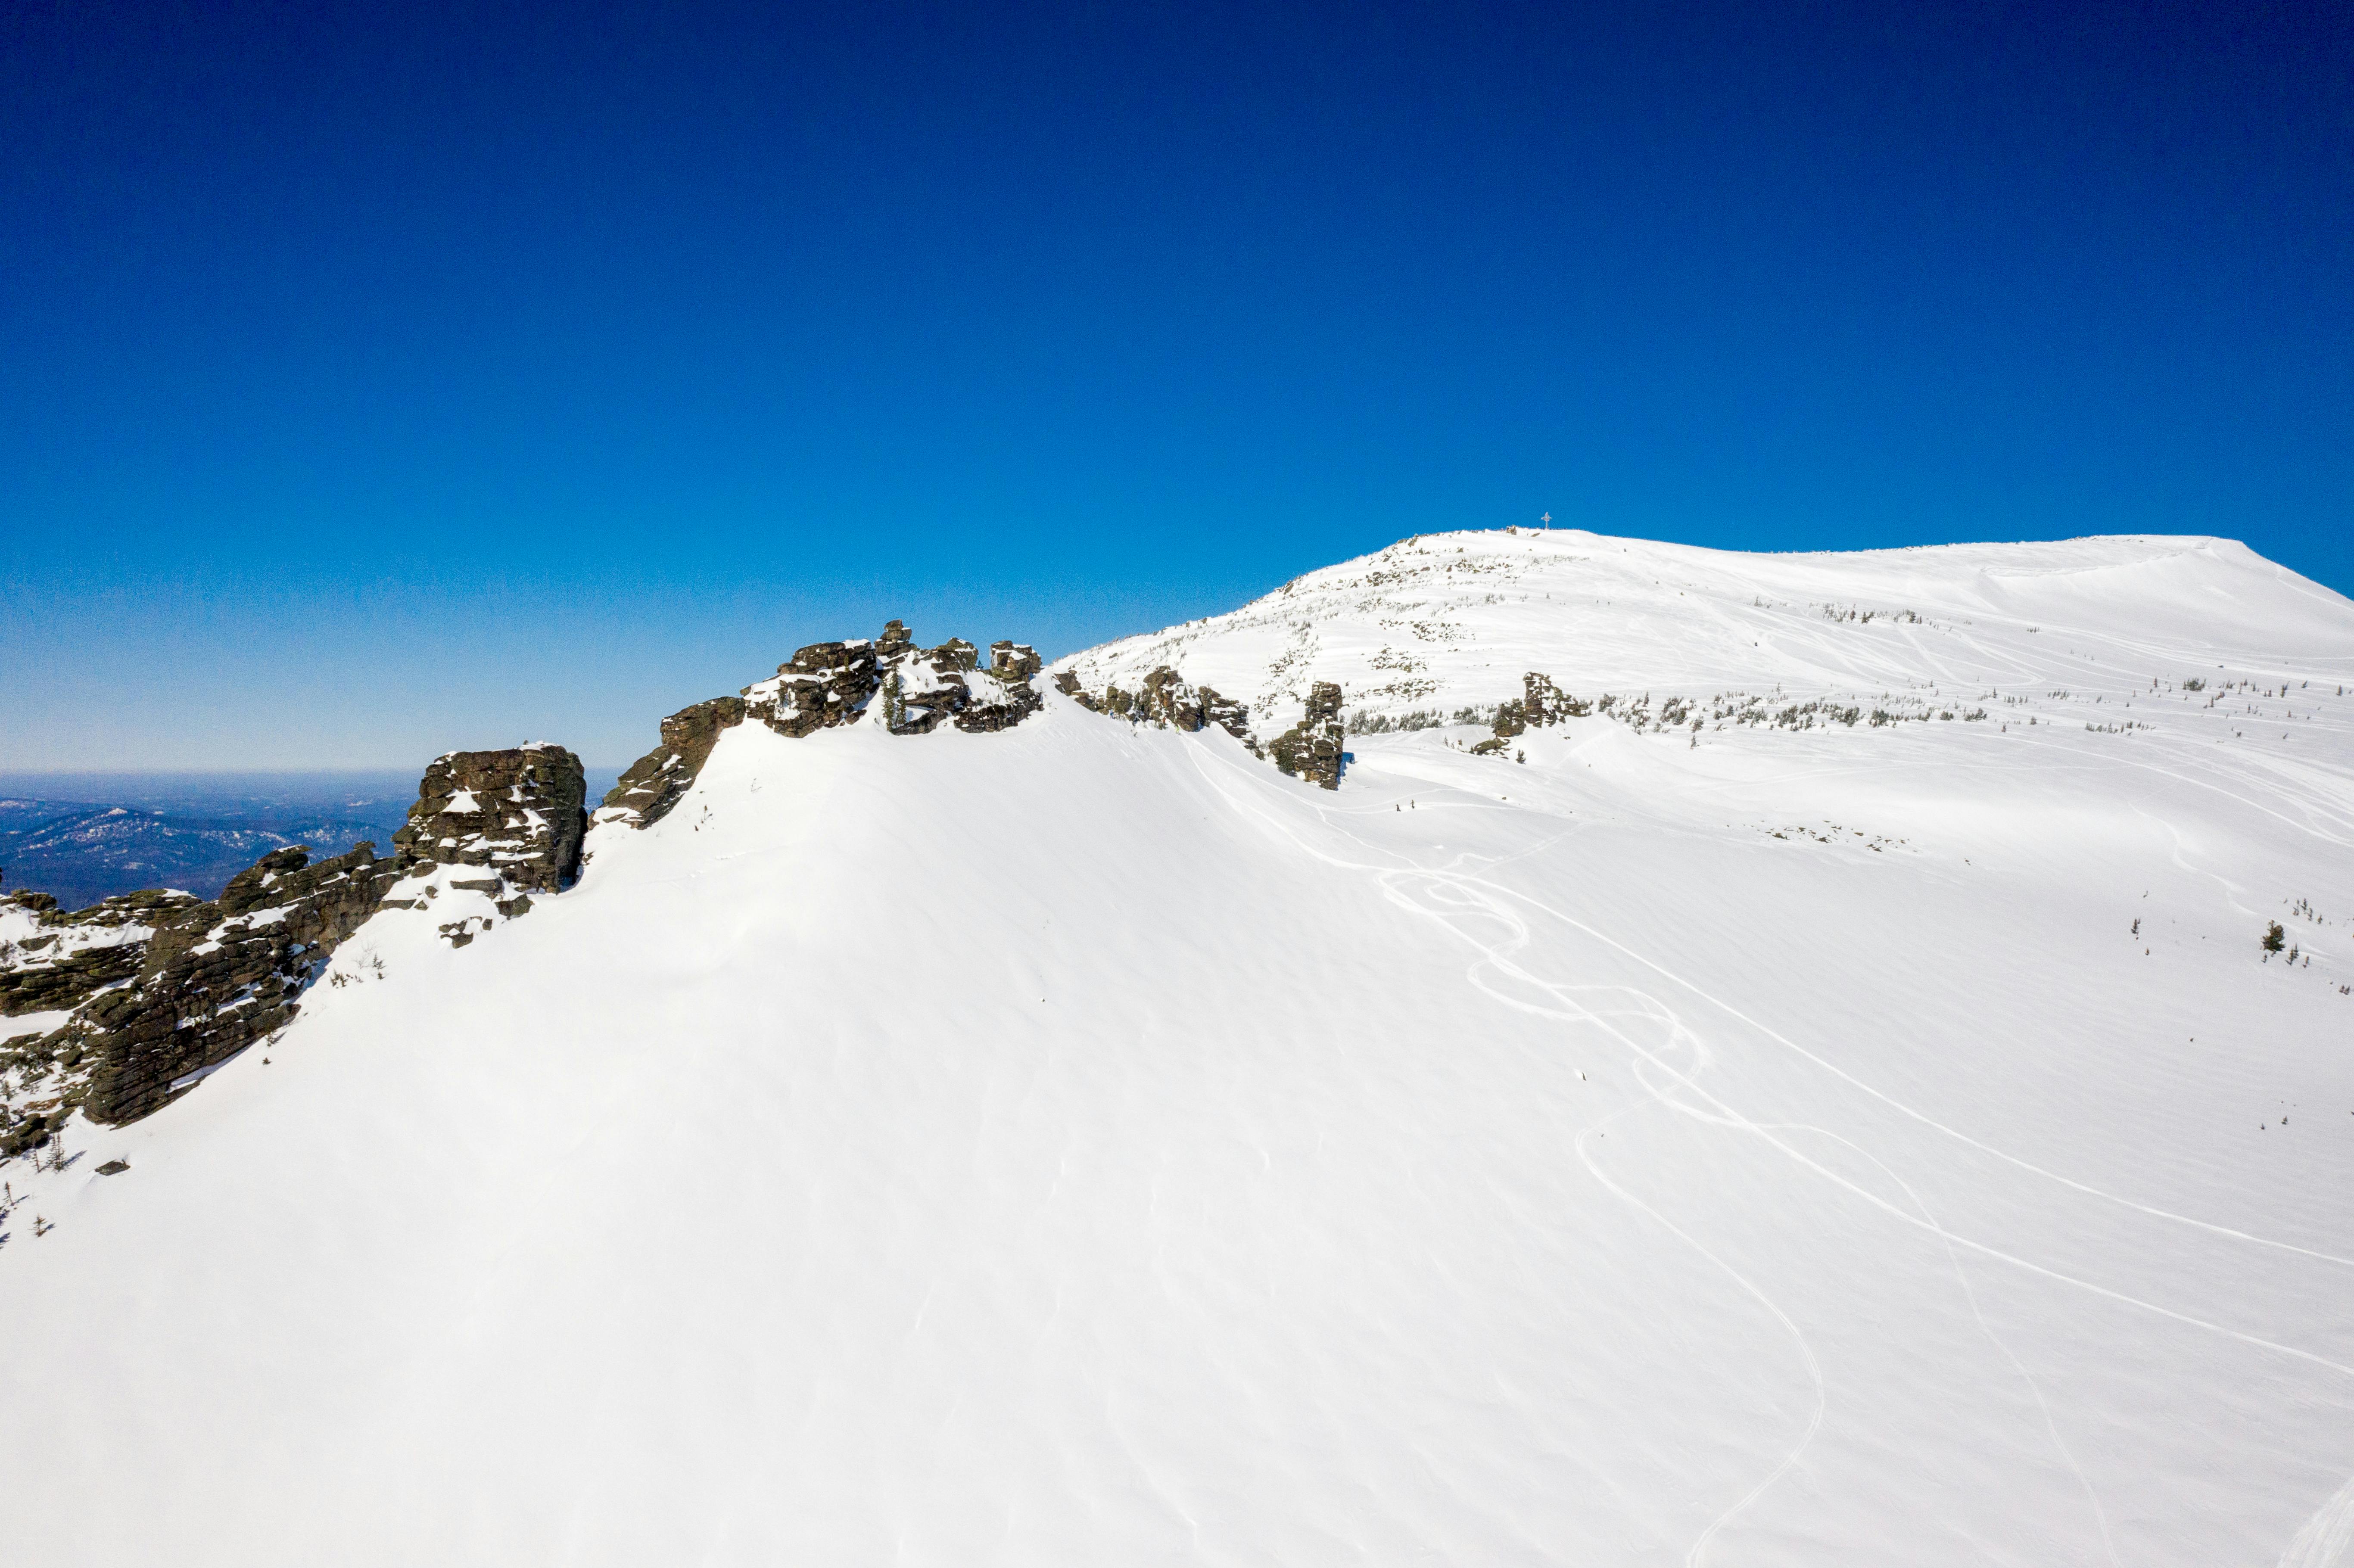 Snow cover, Free stock photos - Rgbstock - Free stock images, mzacha